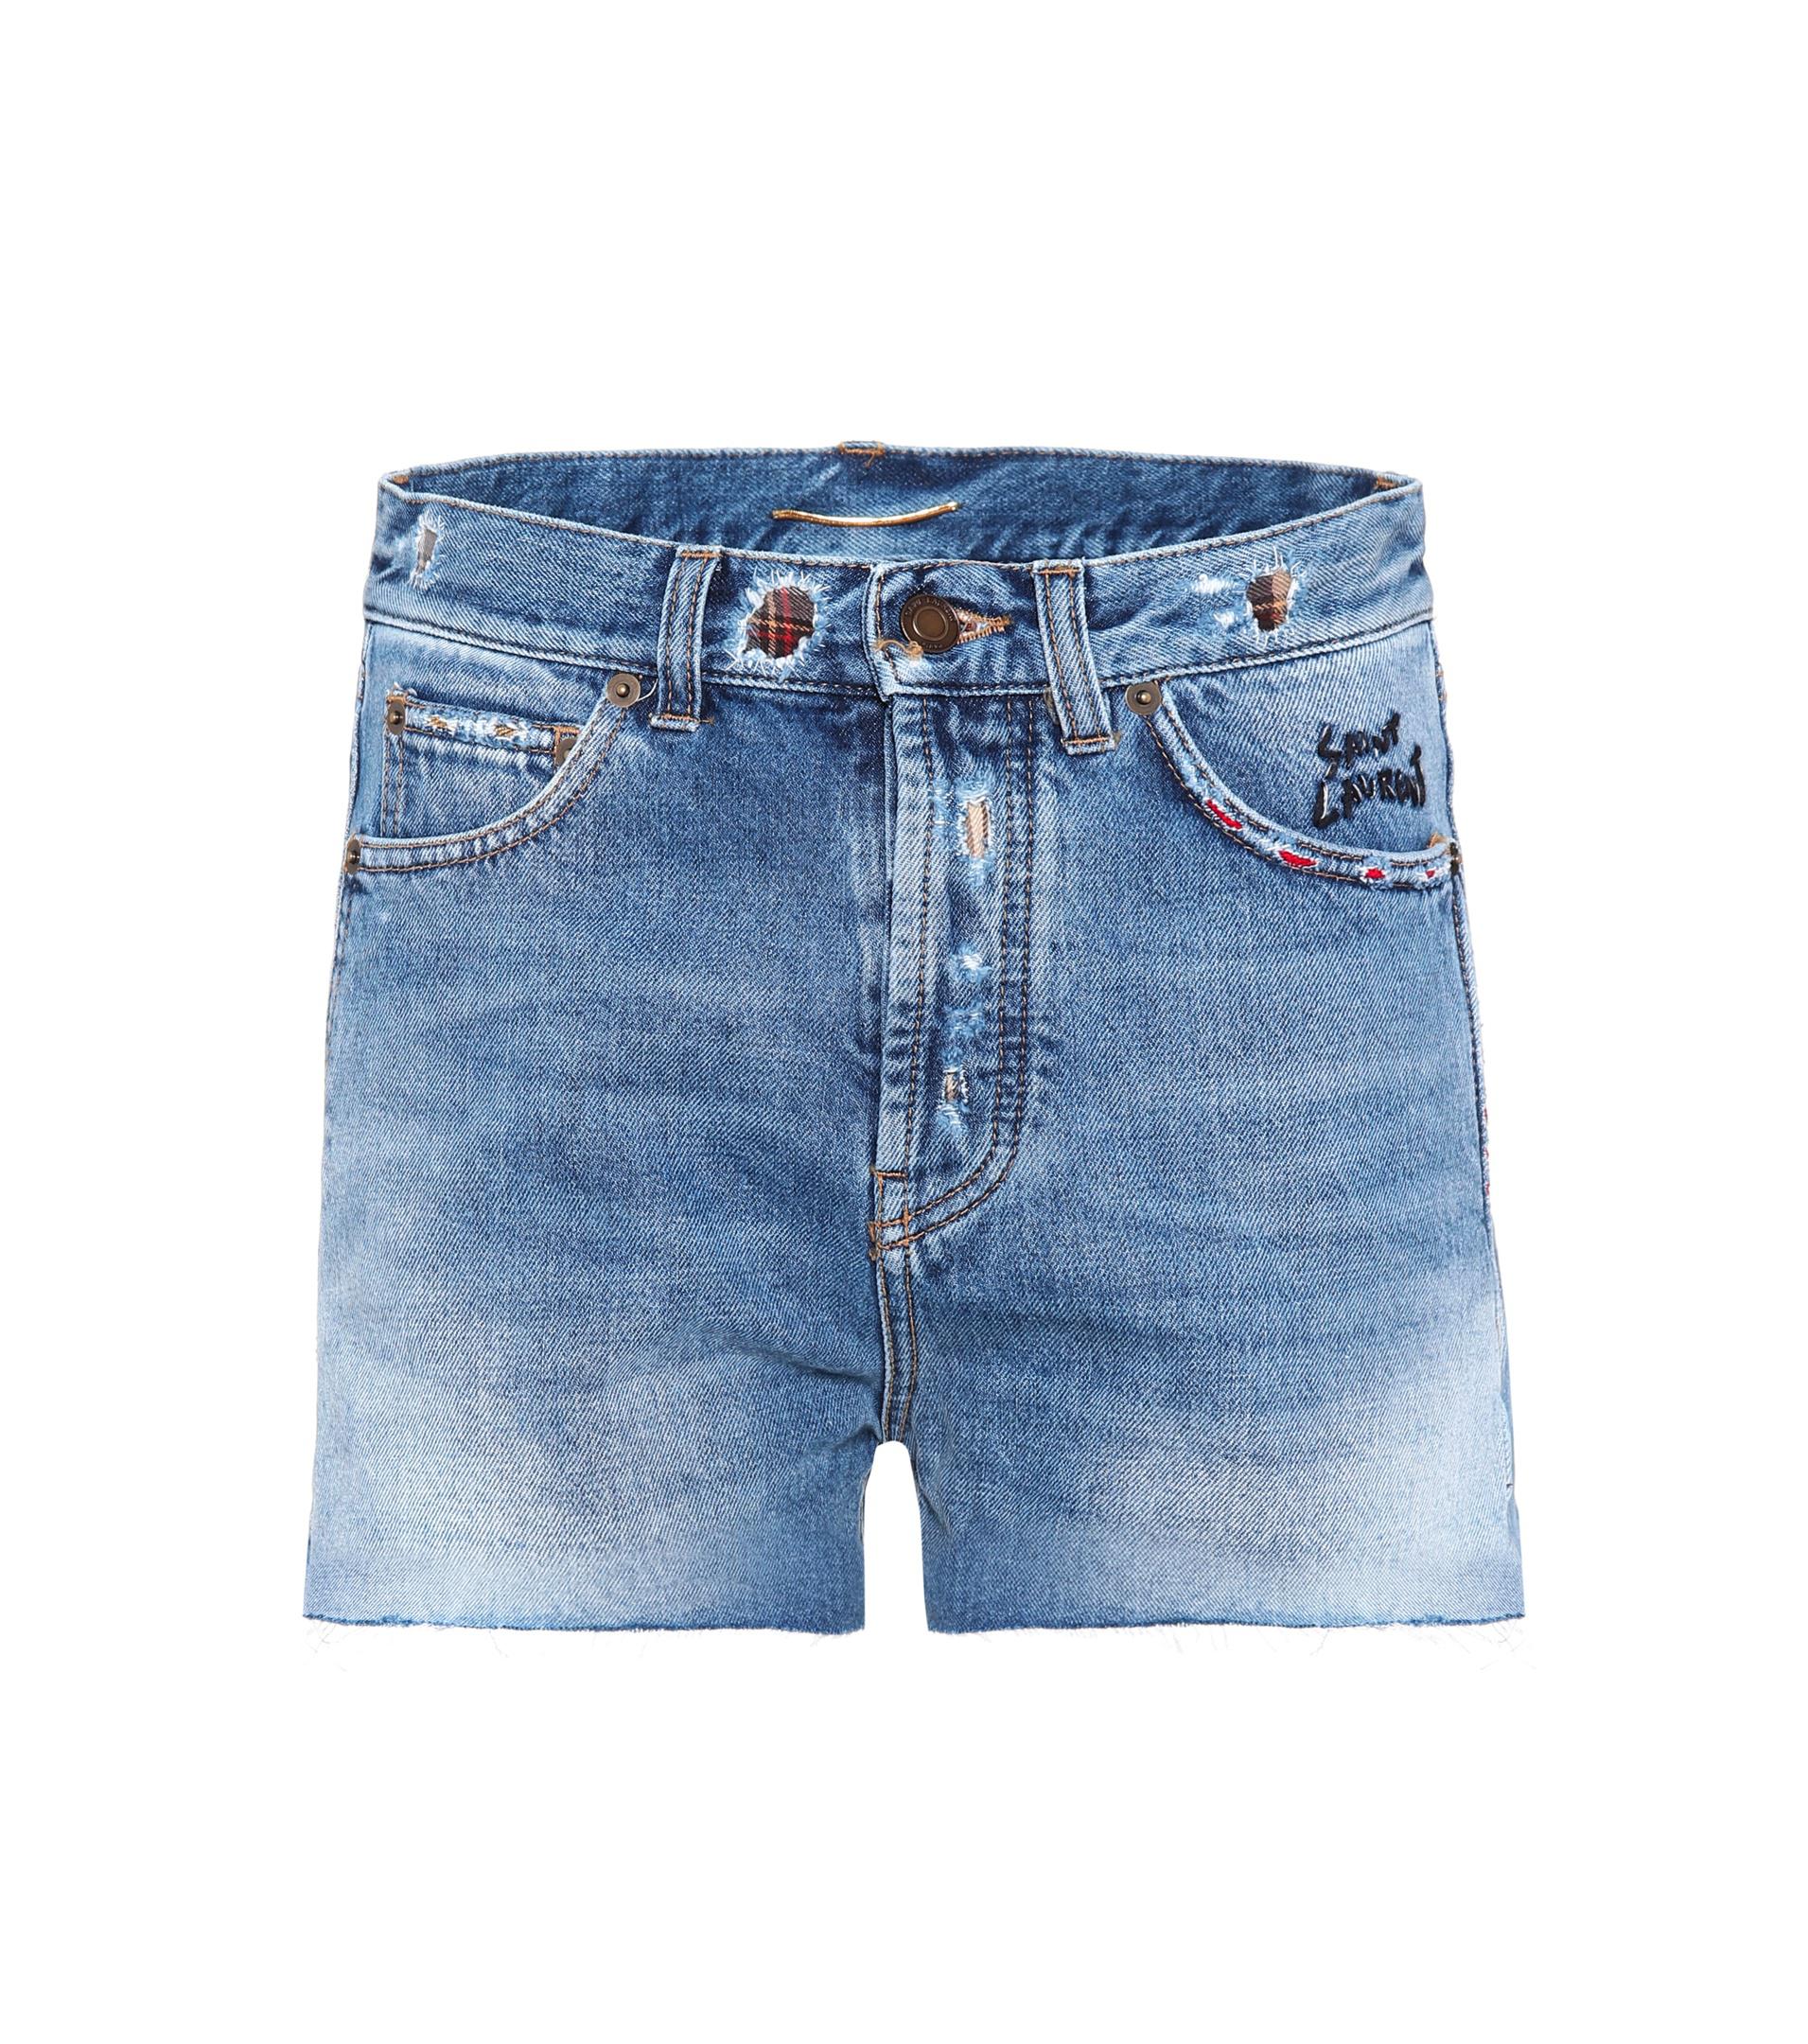 Lyst - Saint Laurent Embroidered Denim Shorts in Blue